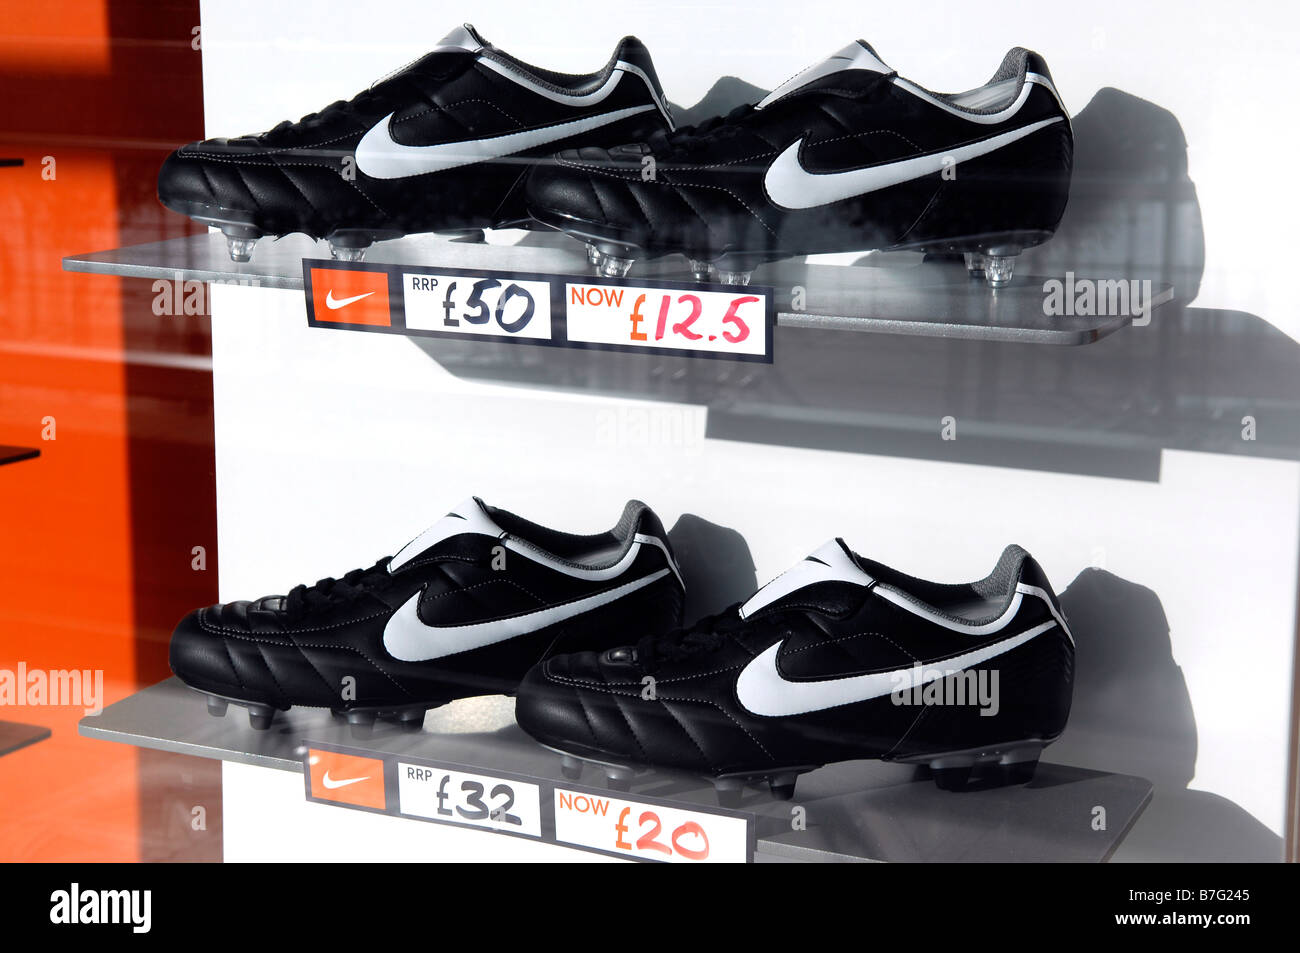 Nike Schuhe Fußball Schuhe Fußball Schuhe Schaufenster reduziert  amerikanische Firma Fashion Retail Shop Store niketown Stockfotografie -  Alamy